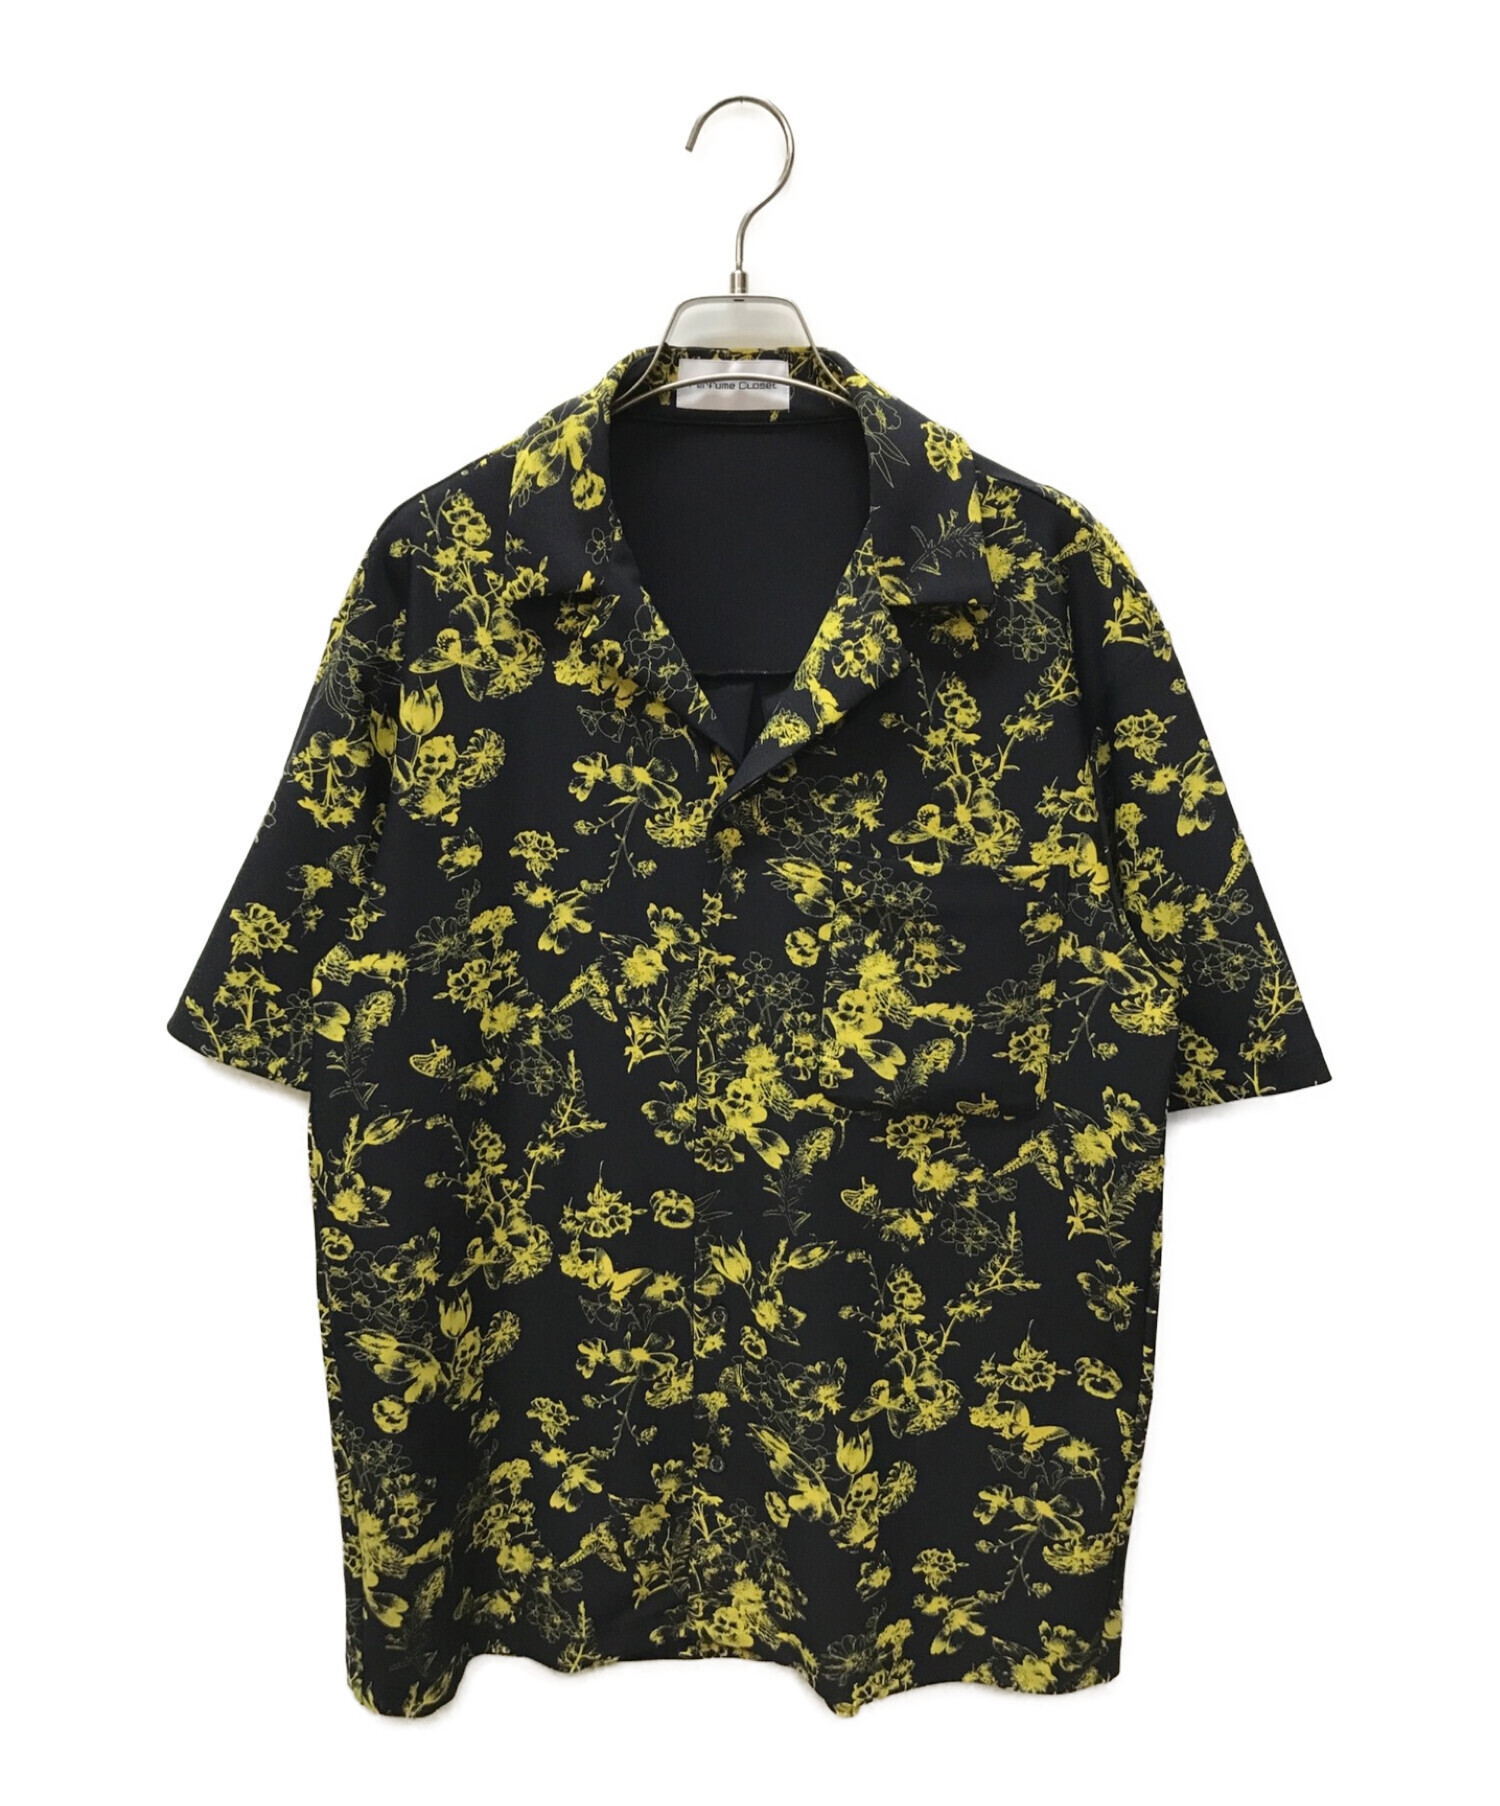 Perfume Closet (パフューム クローゼット) Short Sleeve Shirts/Inspired by If you wanna  イエロー サイズ:Free